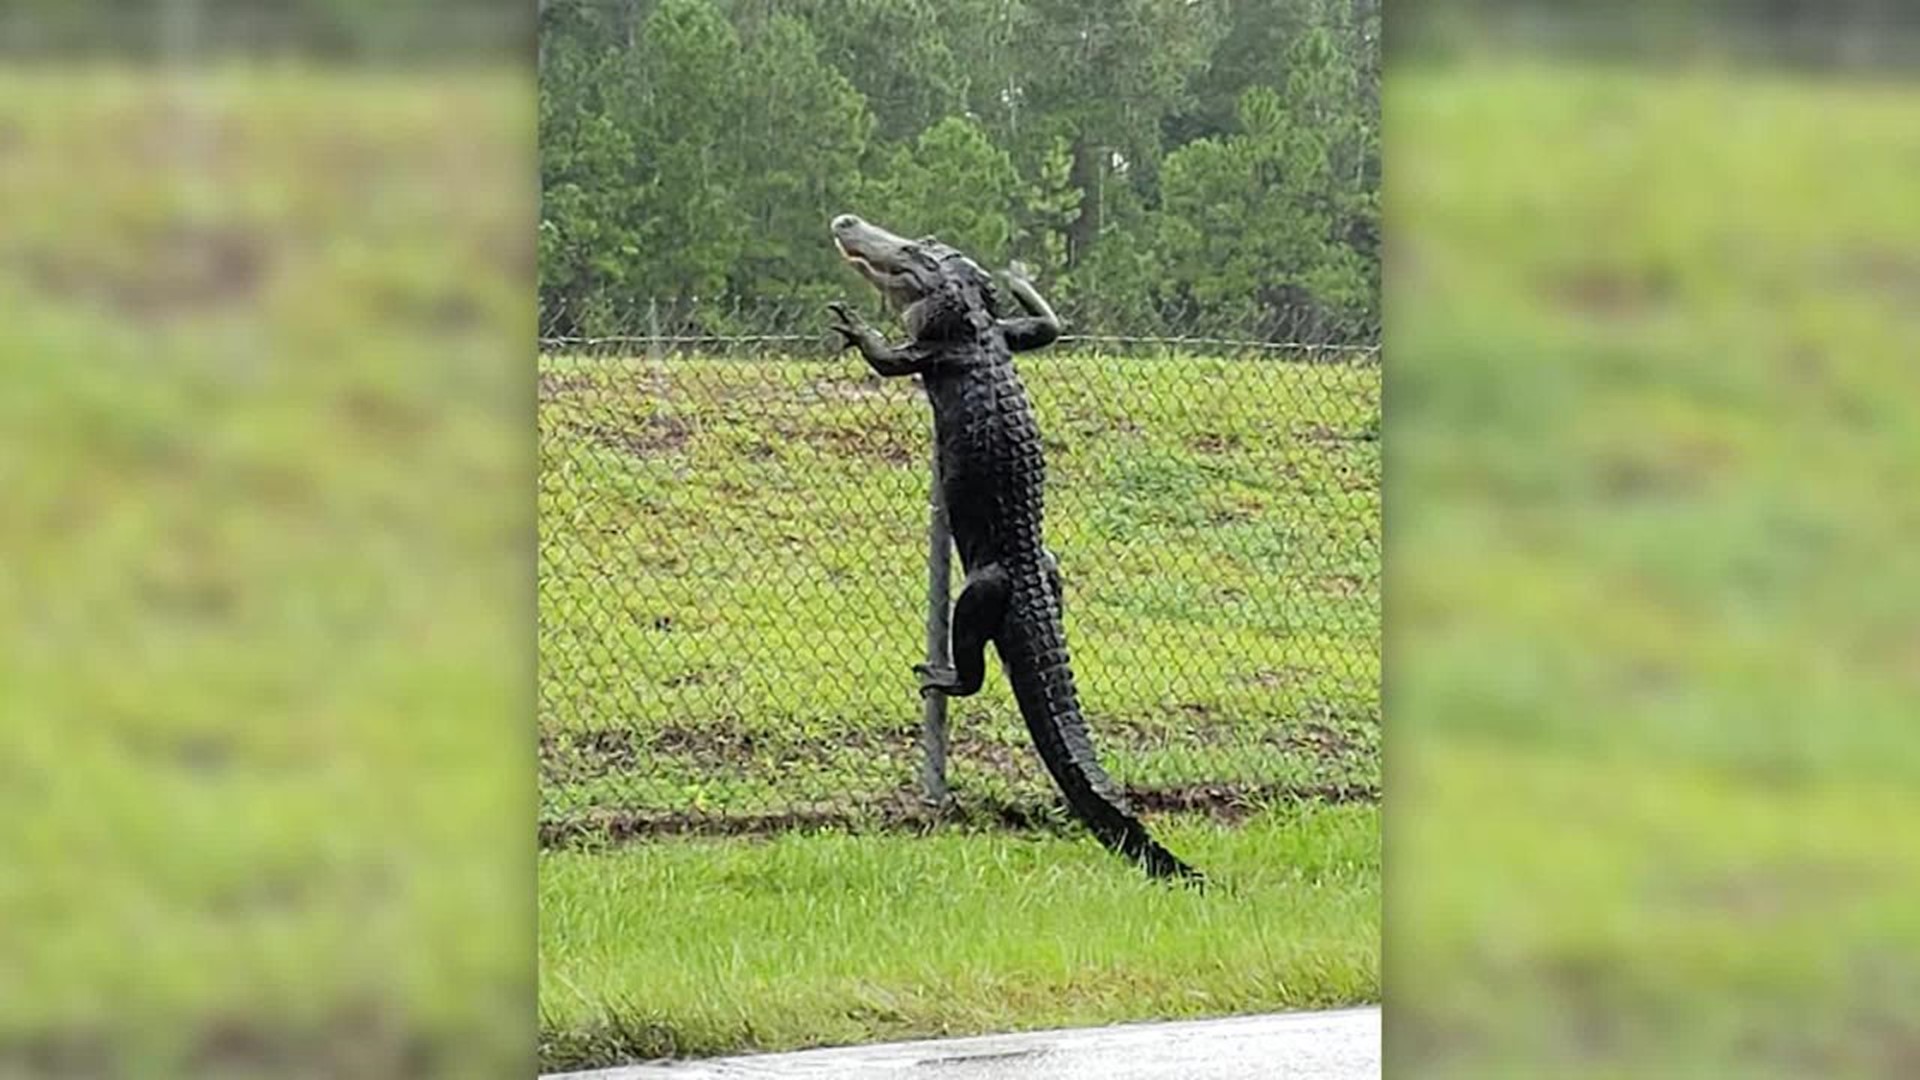 Alligator caught climbing fence in Florida